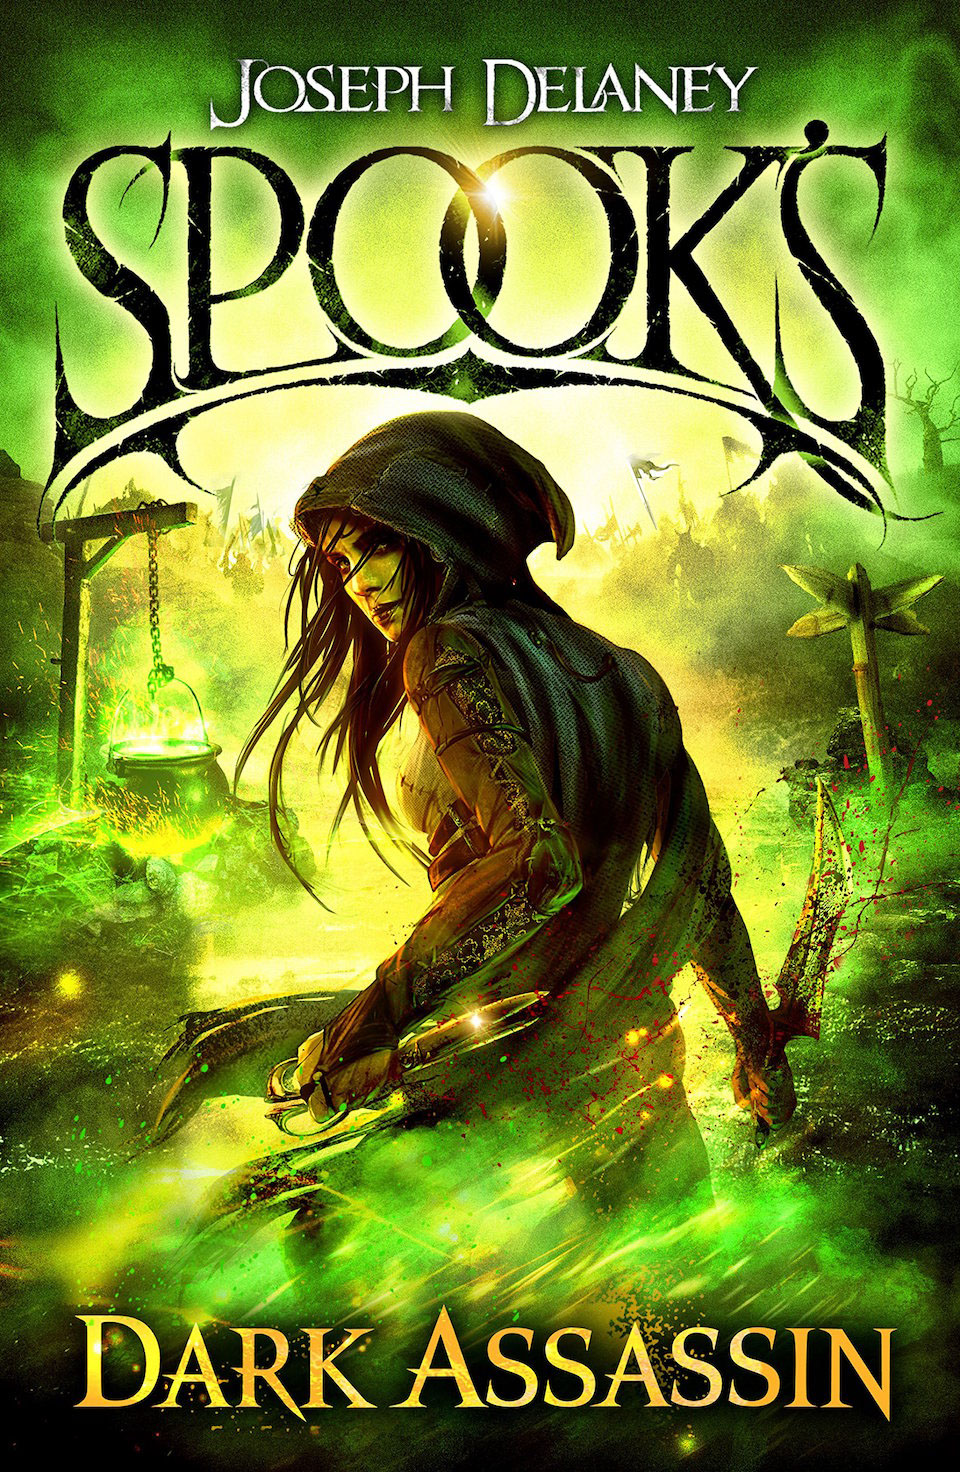 book book cover spook spook's Joseph Delaney delaney penguin random house Dark Fantasy green assassin